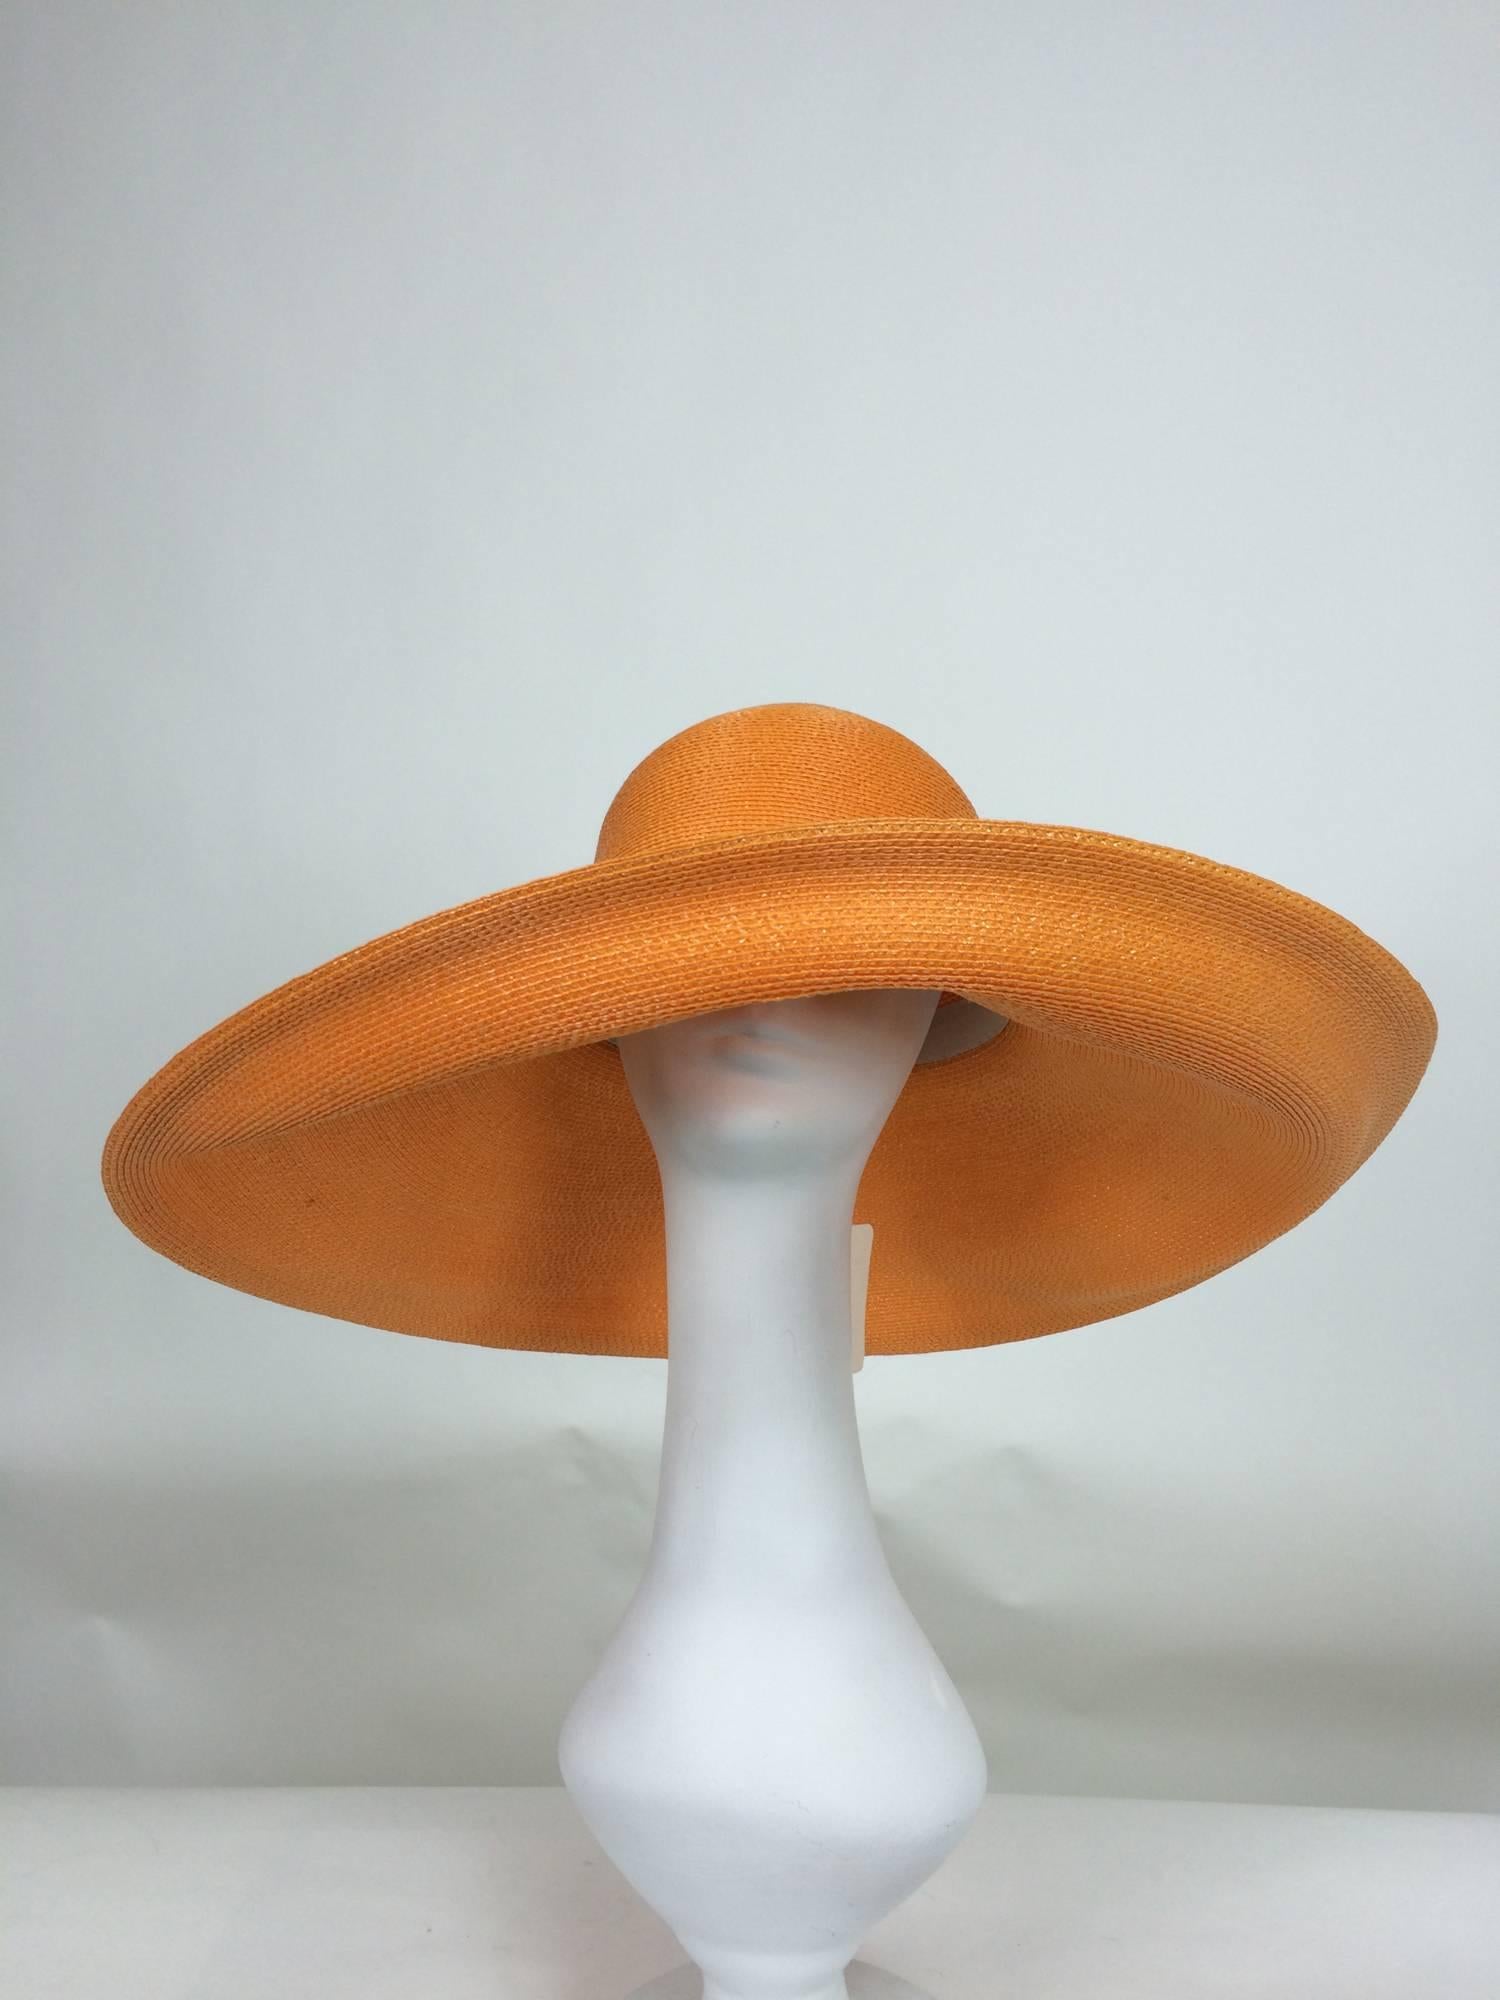  Vintage Galanos orange glazed straw wide brim hat 1960s unworn...Super wide brim hat has a deep crown, inside gros grain ribbon band...Brim can be worn turned back or down...Fine quality straw...
Measurements:
22